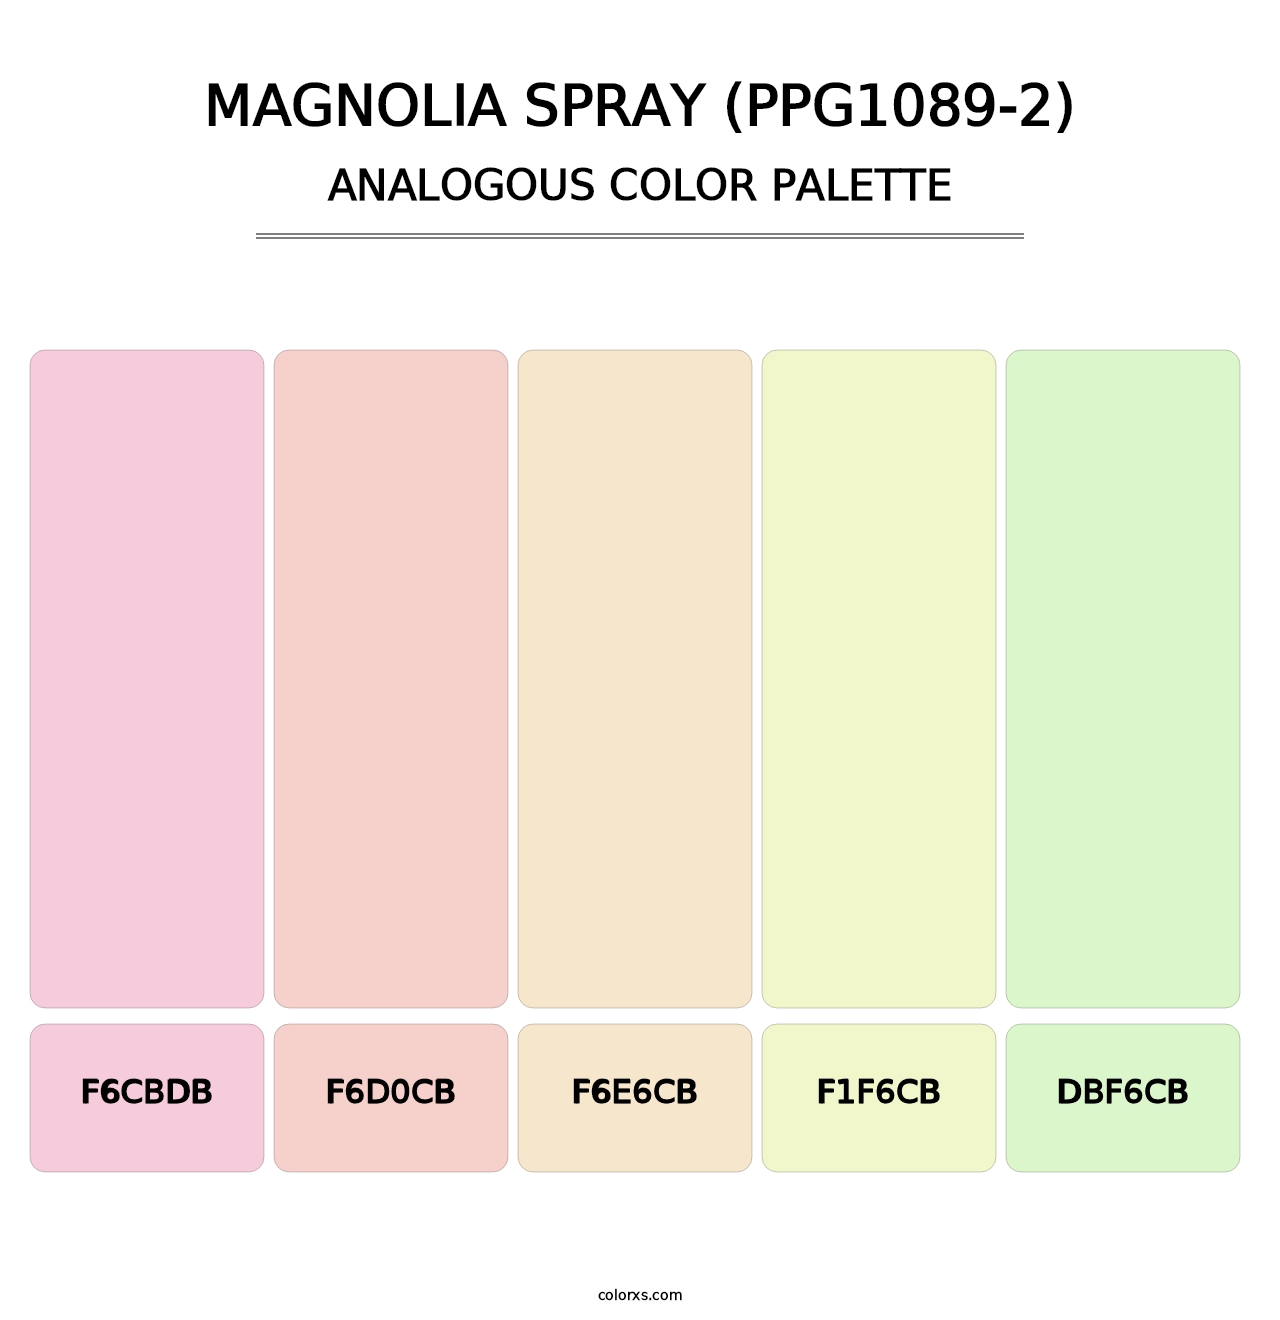 Magnolia Spray (PPG1089-2) - Analogous Color Palette